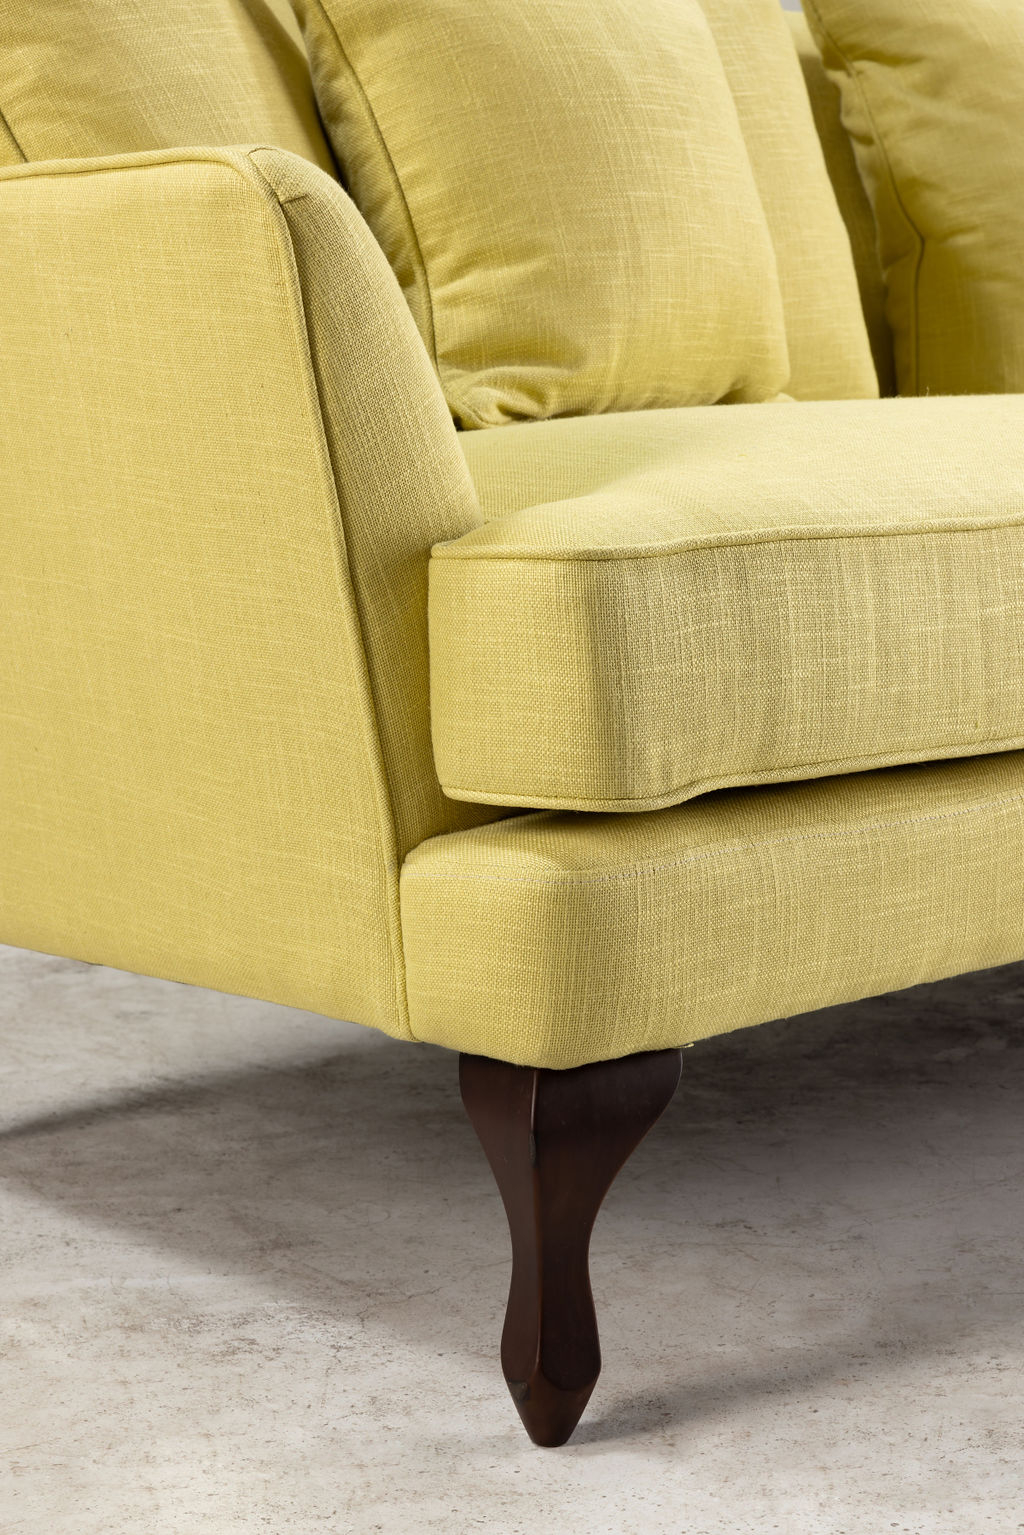 Block & Chisel yellow linen upholstered 3 seater sofa